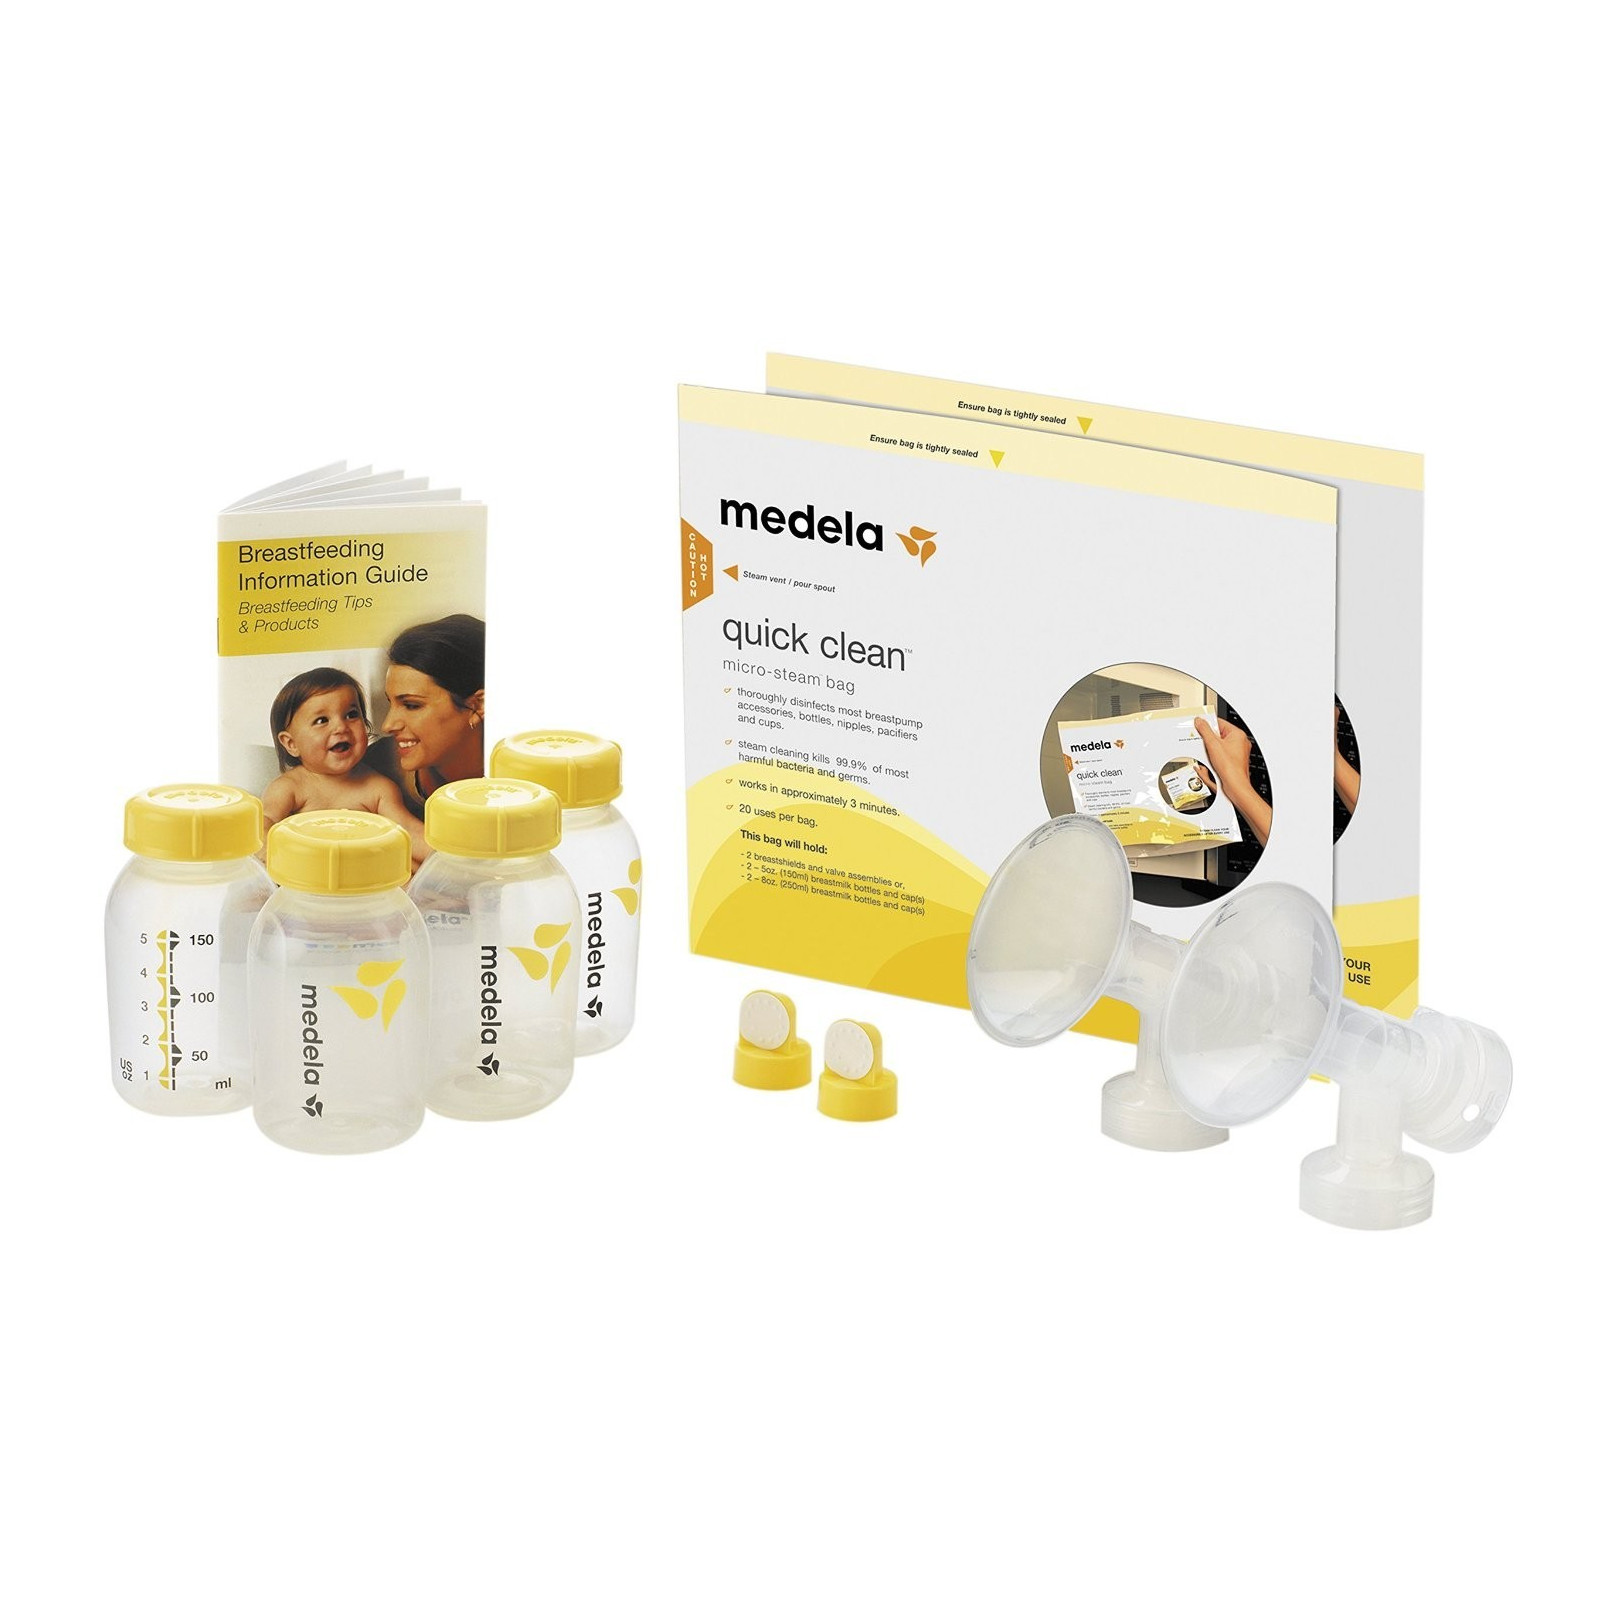 https://amedsupplies.com/653-original/medela-disposable-nursing-pads-30-count.jpg